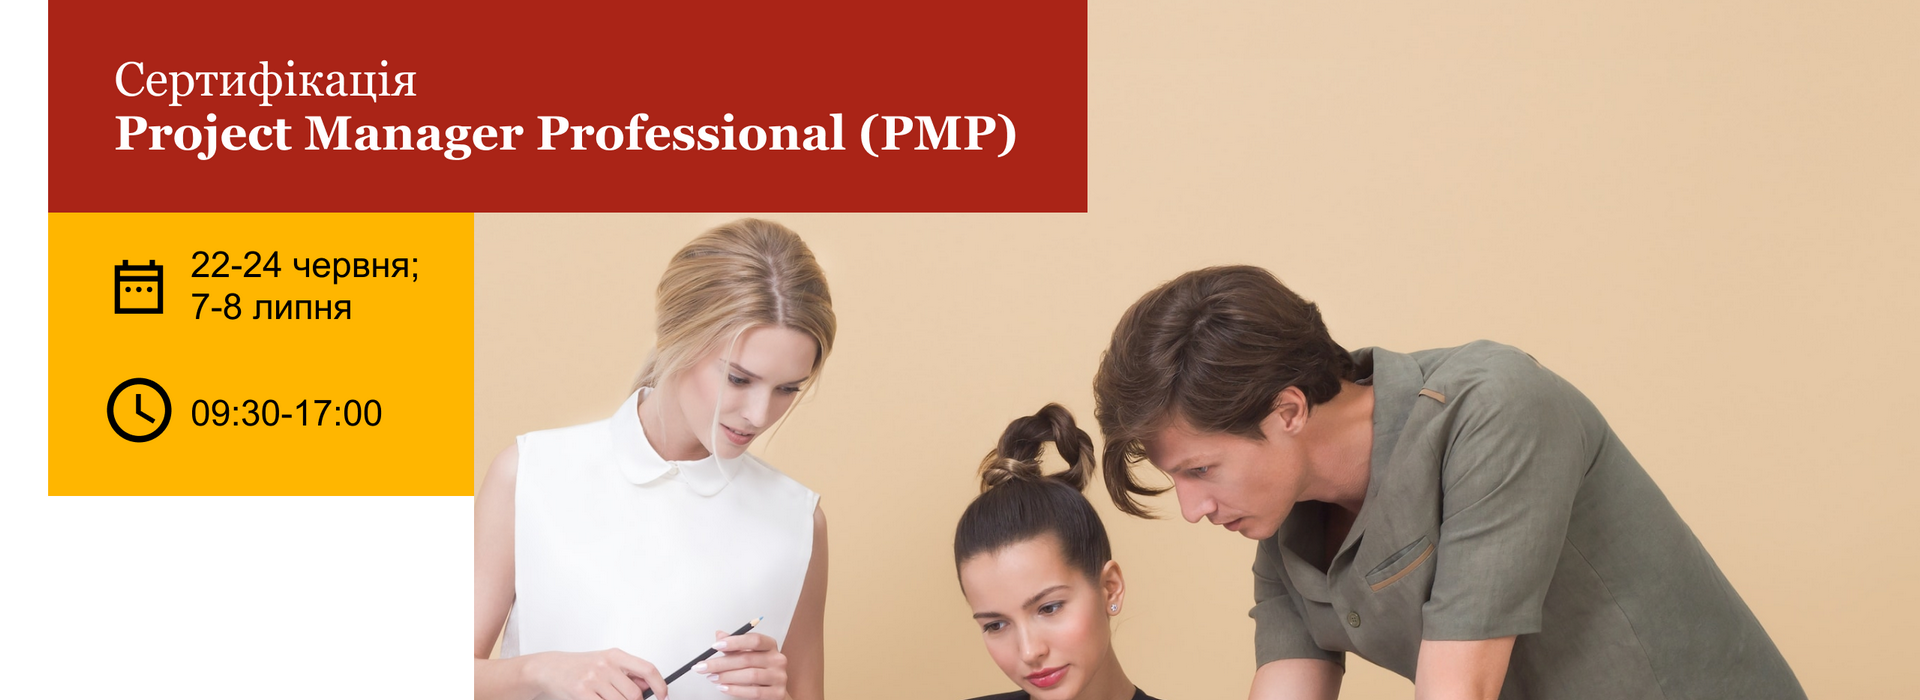 Сертифікація «Project Manager Professional (PMP)®»